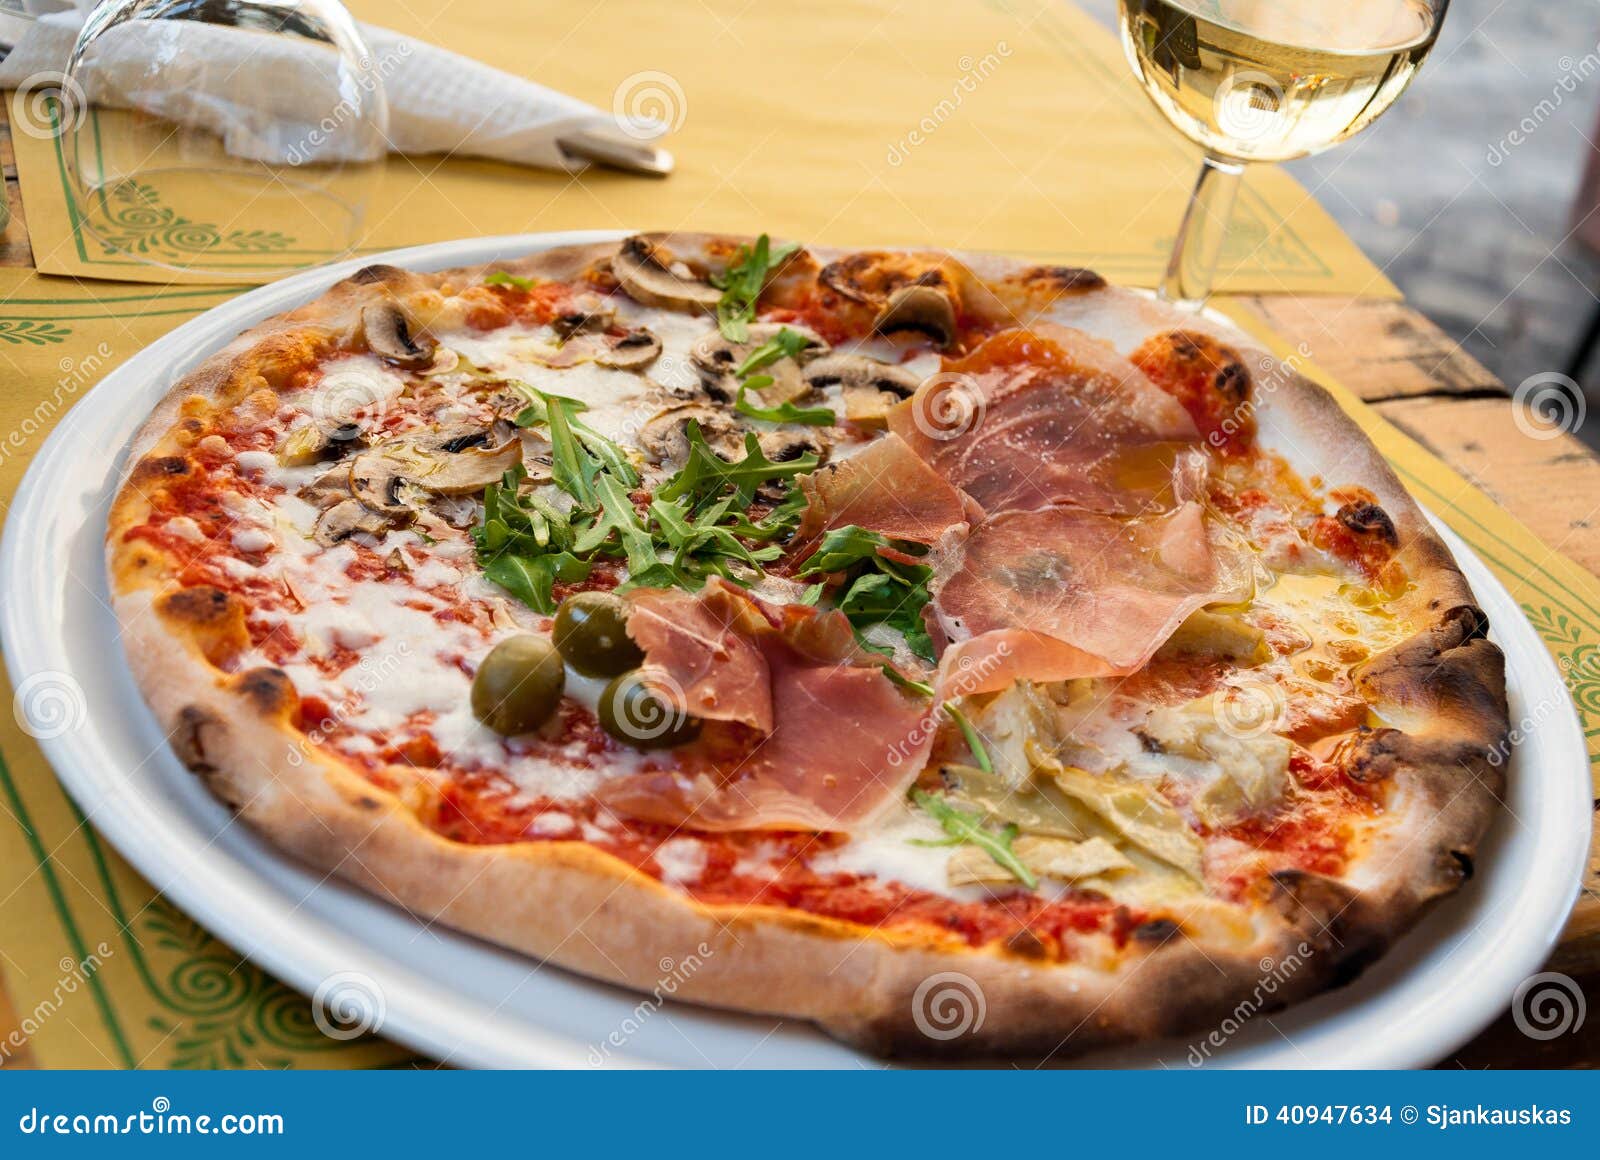 italian pizza in street cafe